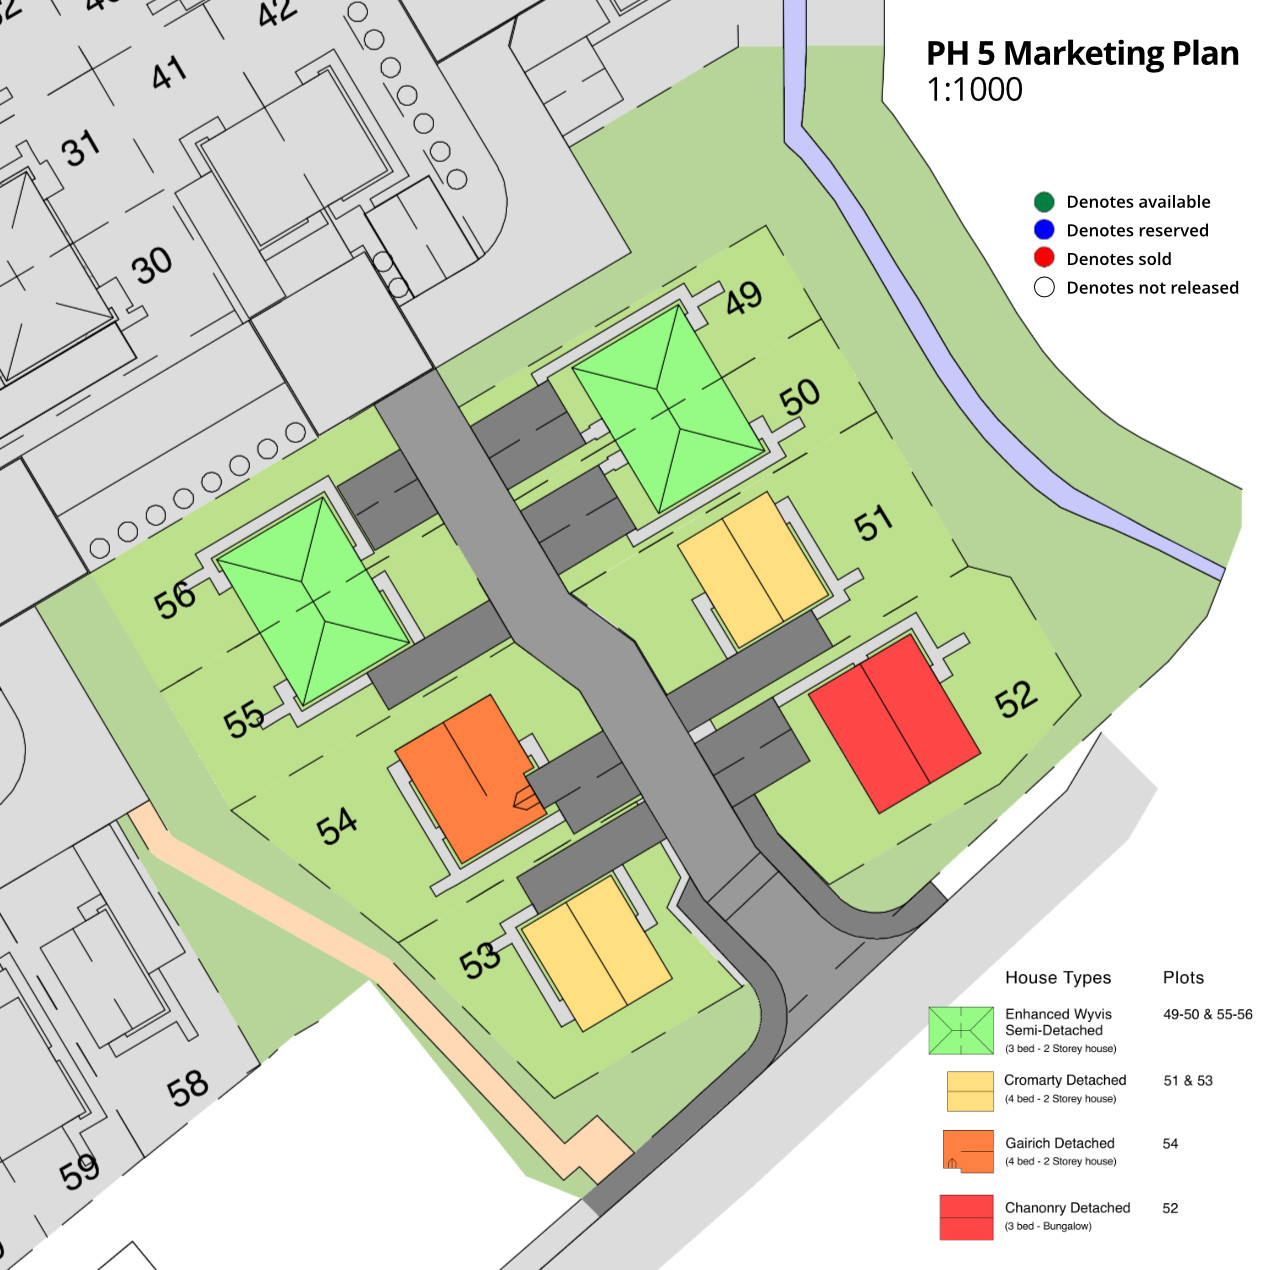 Whitehills View, development plan of new houses, Alness